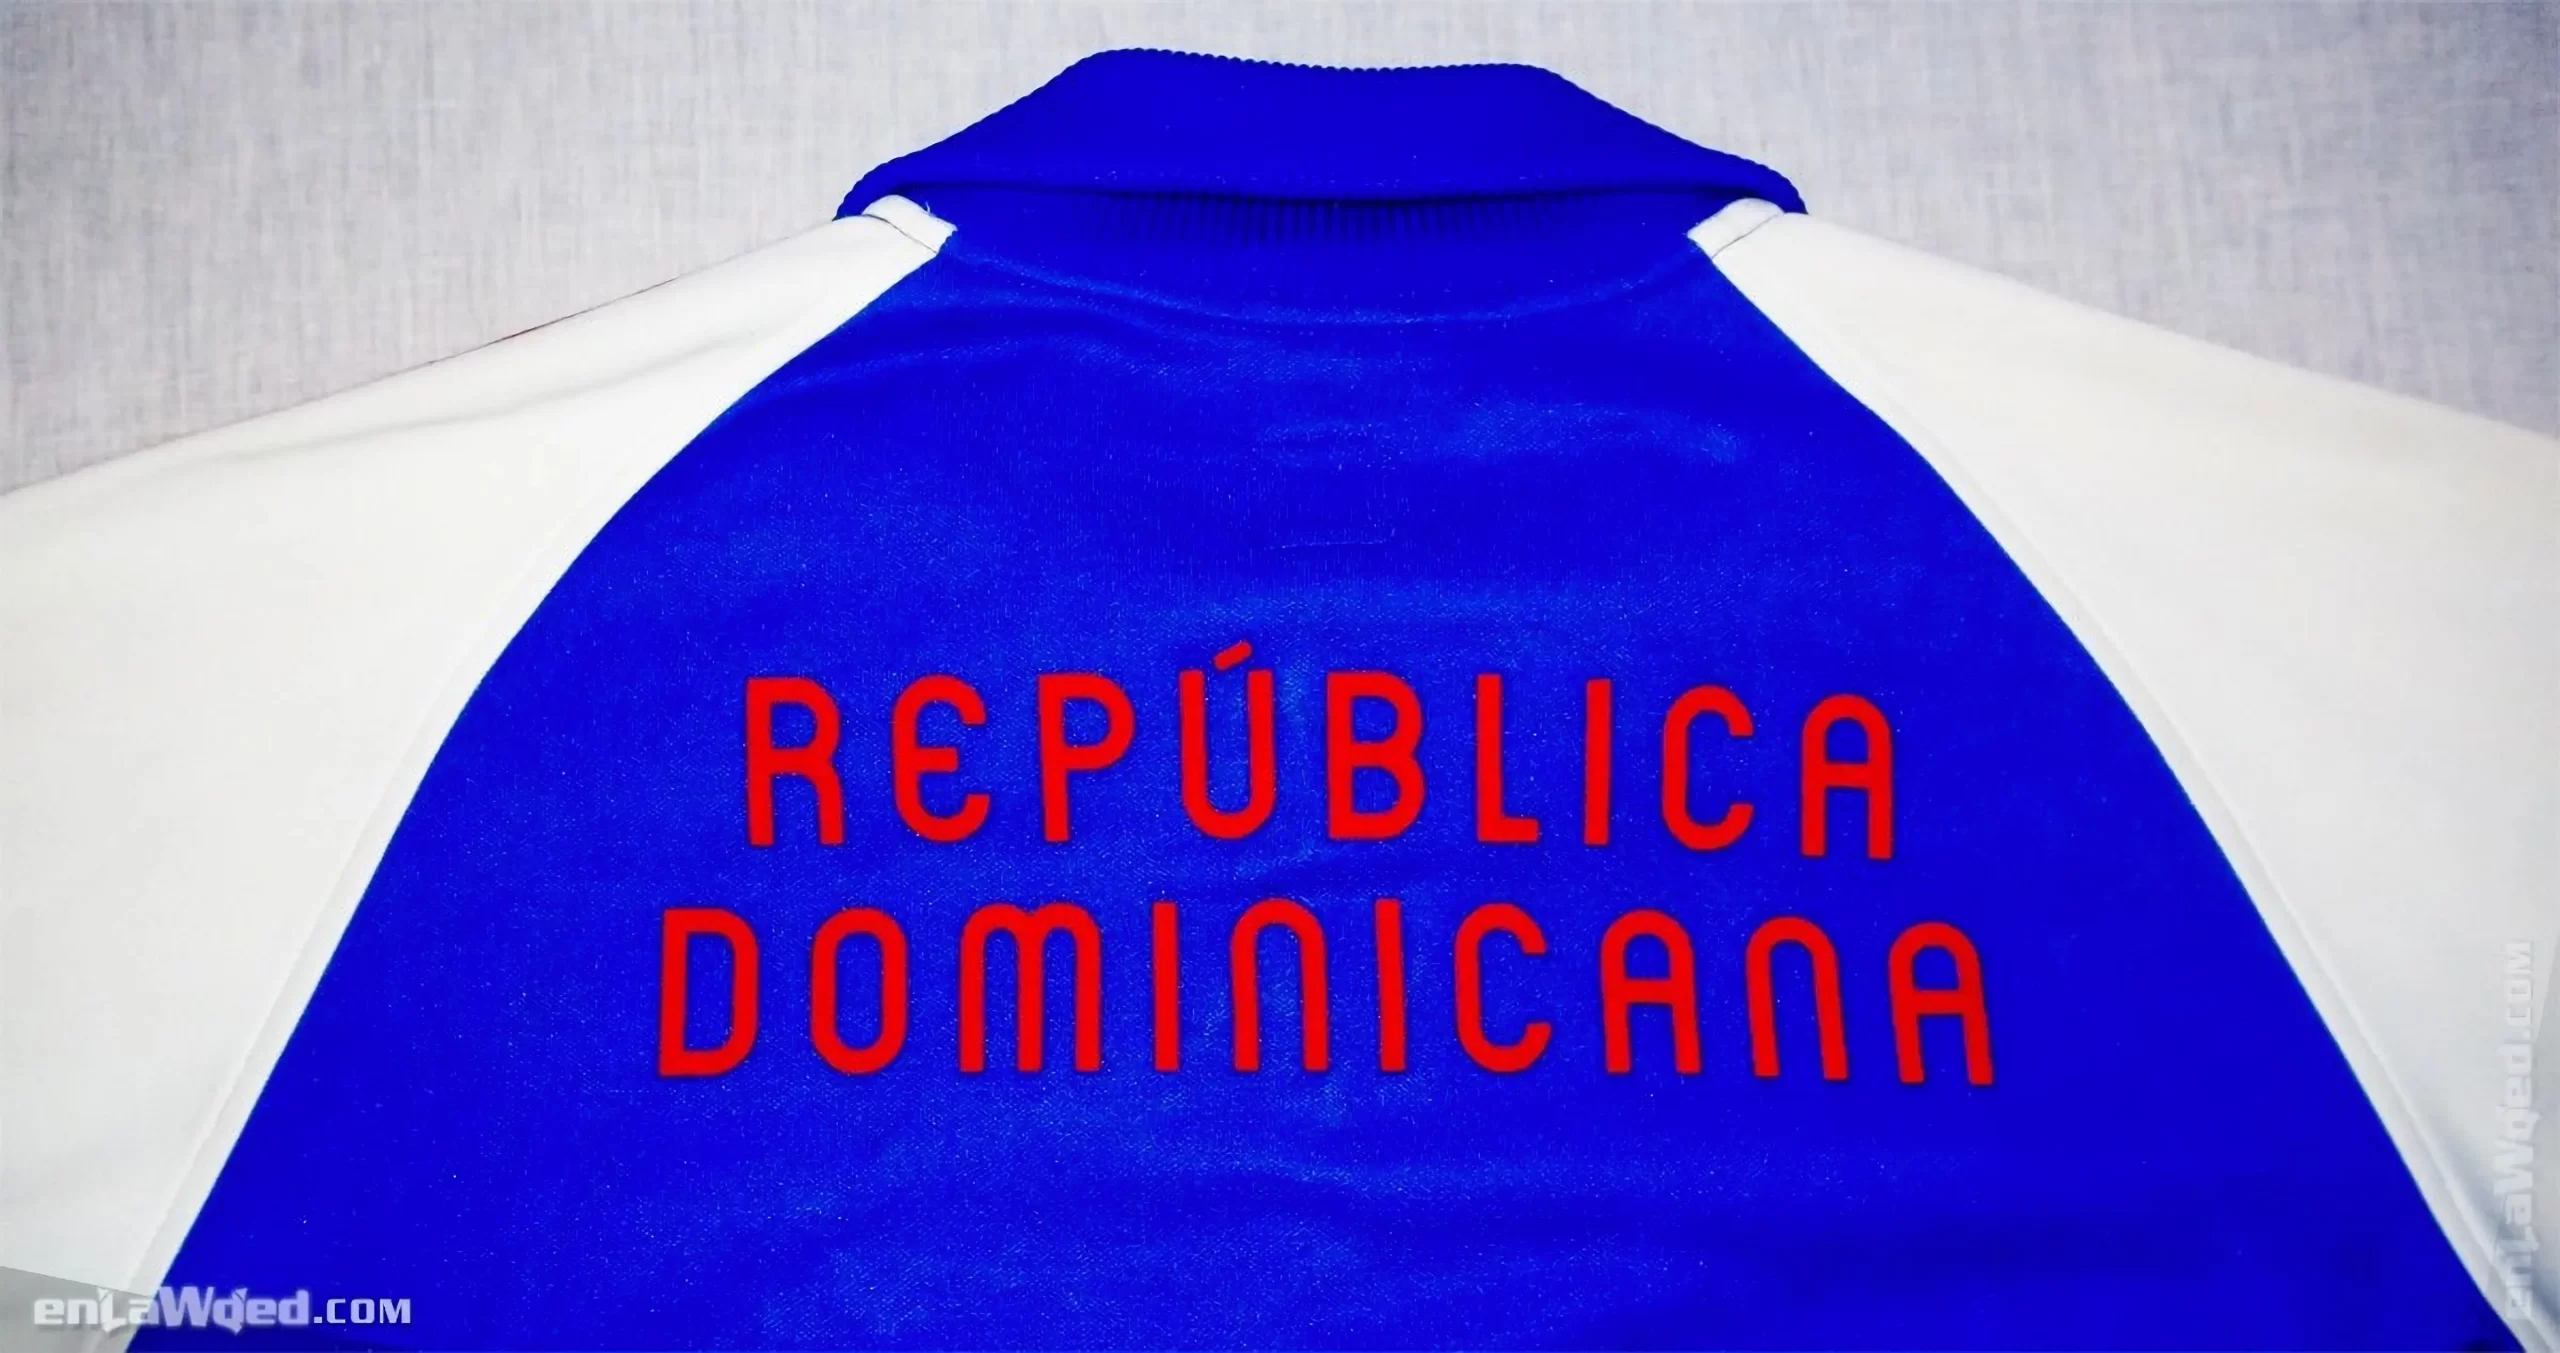 Men’s 2006 Dominican Republic TT by Adidas Originals: Inspiring (EnLawded.com file #lmchk89877ip2y121610kg9st)